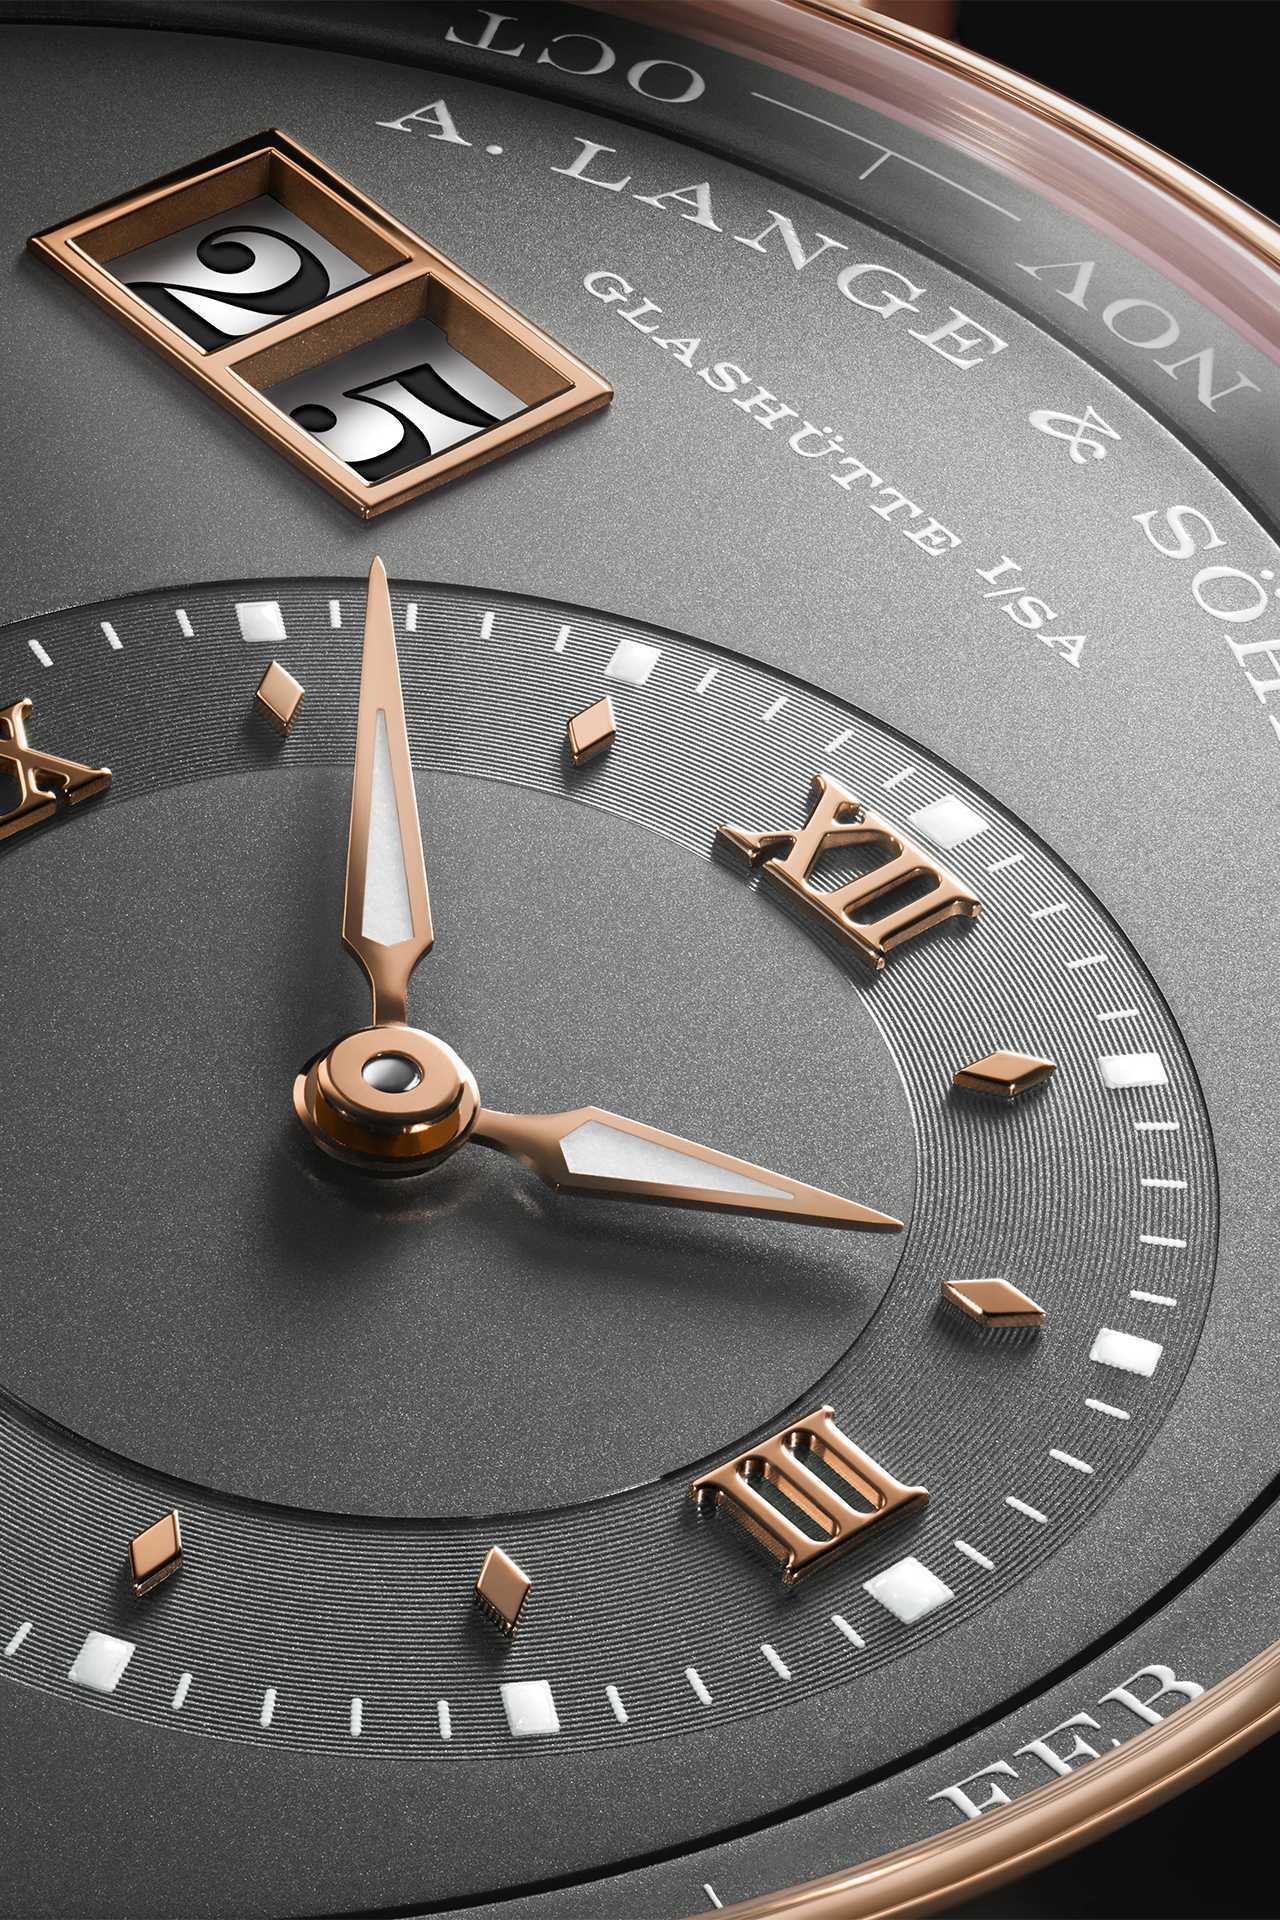 A Lange & Söhne Lange 1 Perpetual Calendar watch